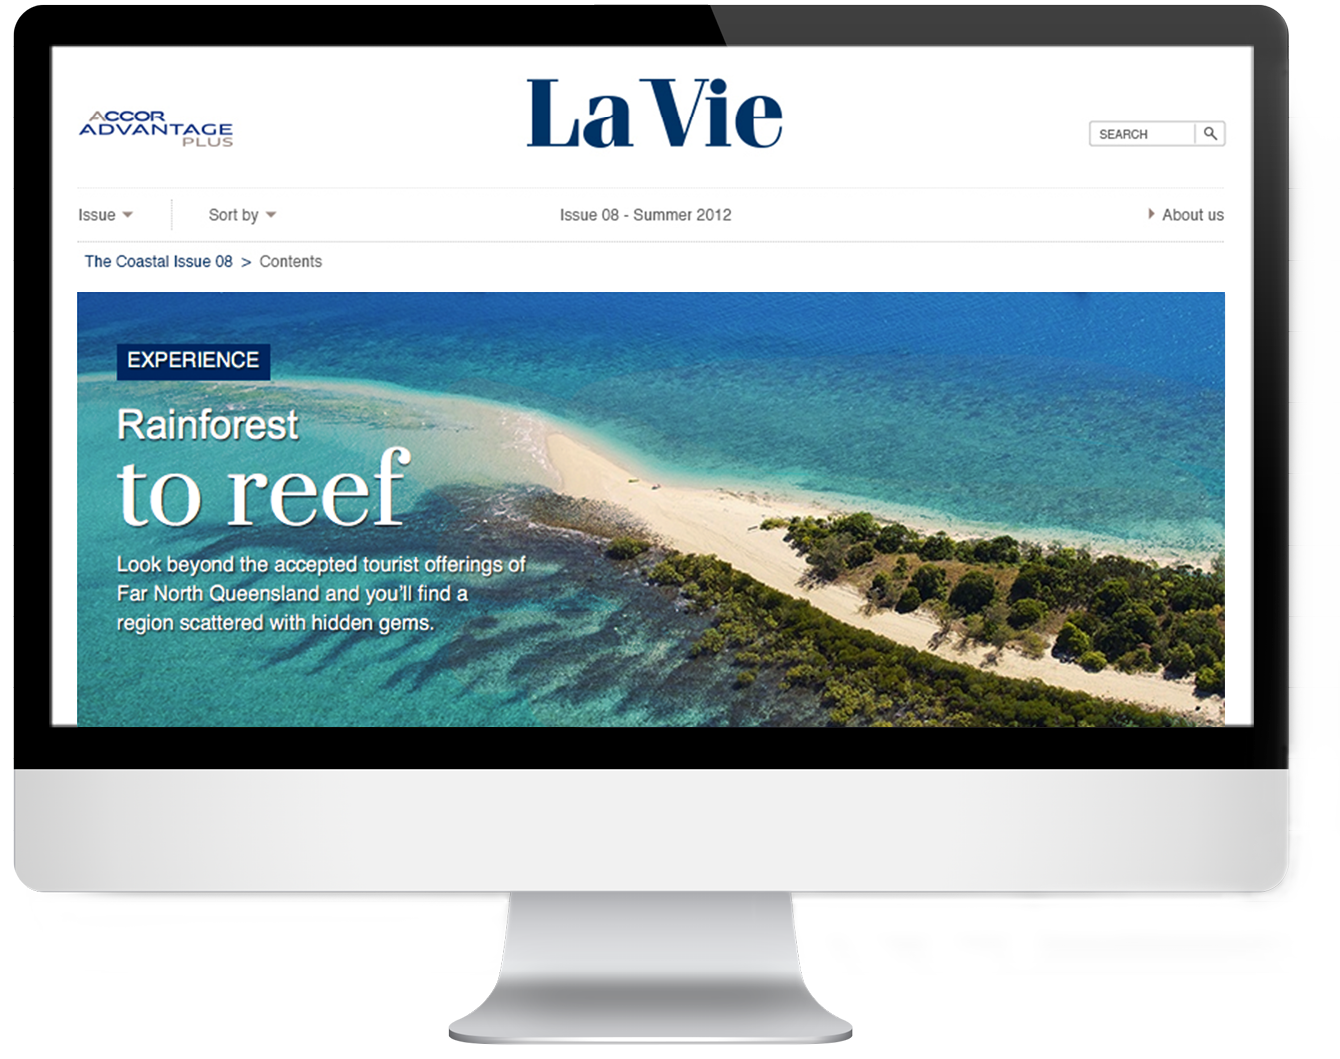 La Vie website - Design by Kristy